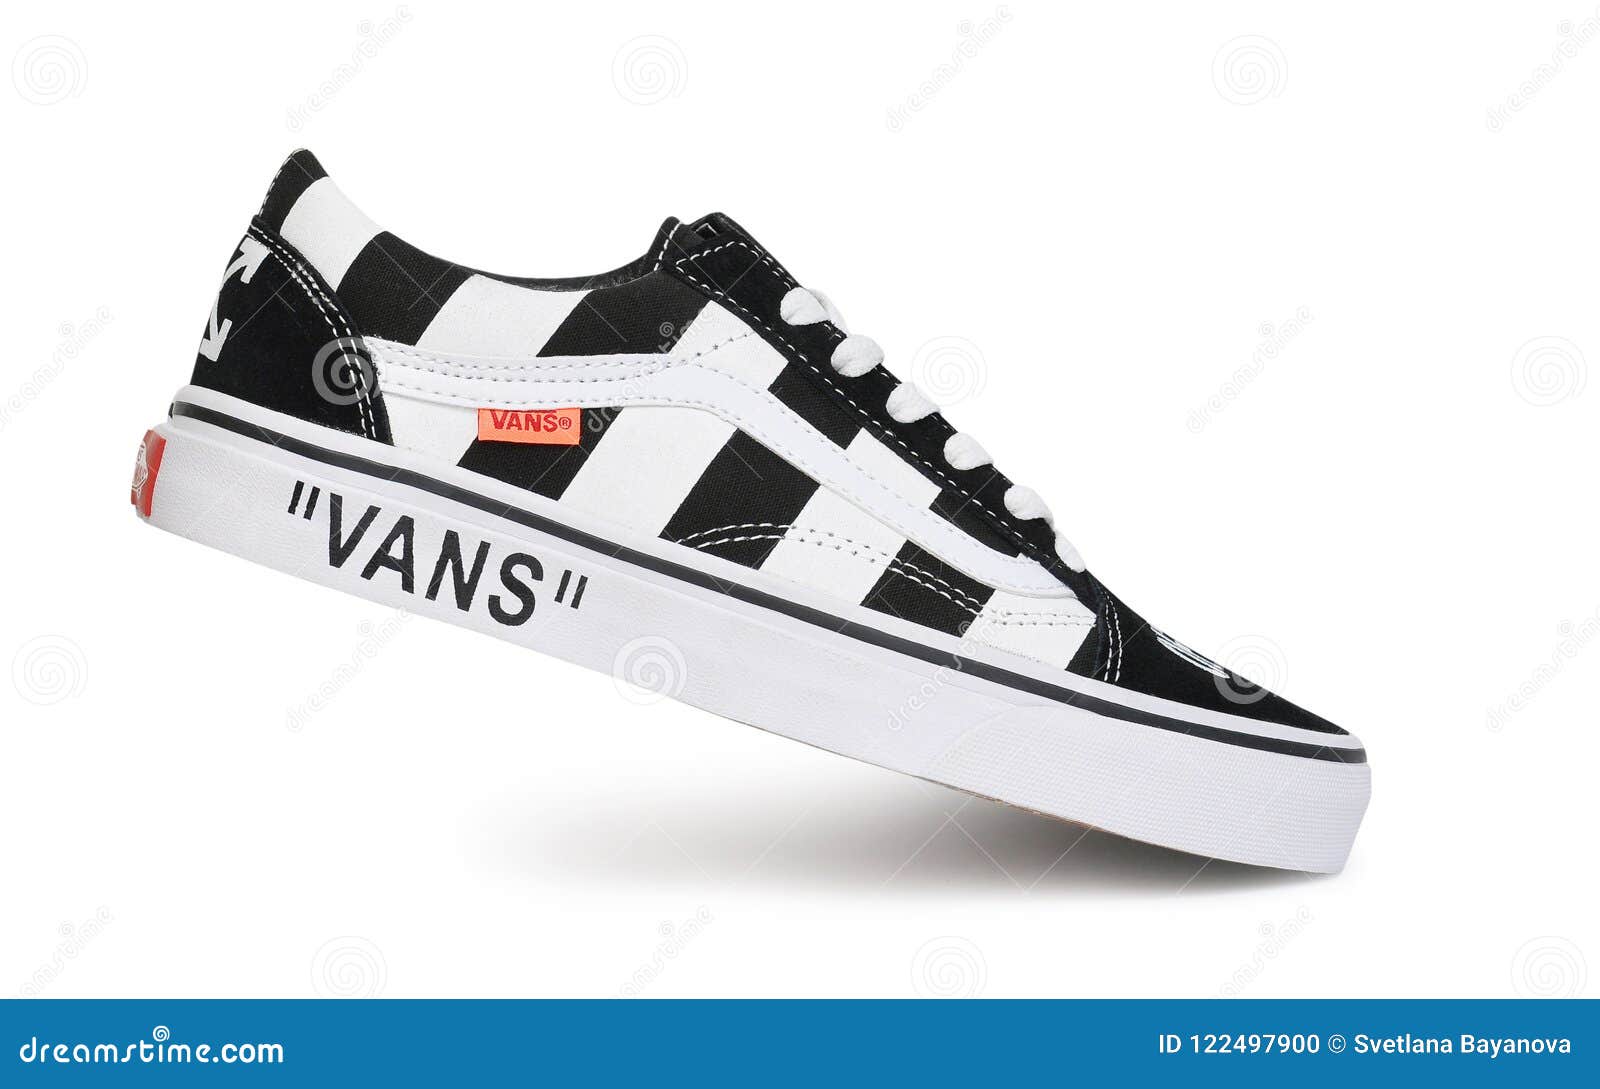 vans shoes background